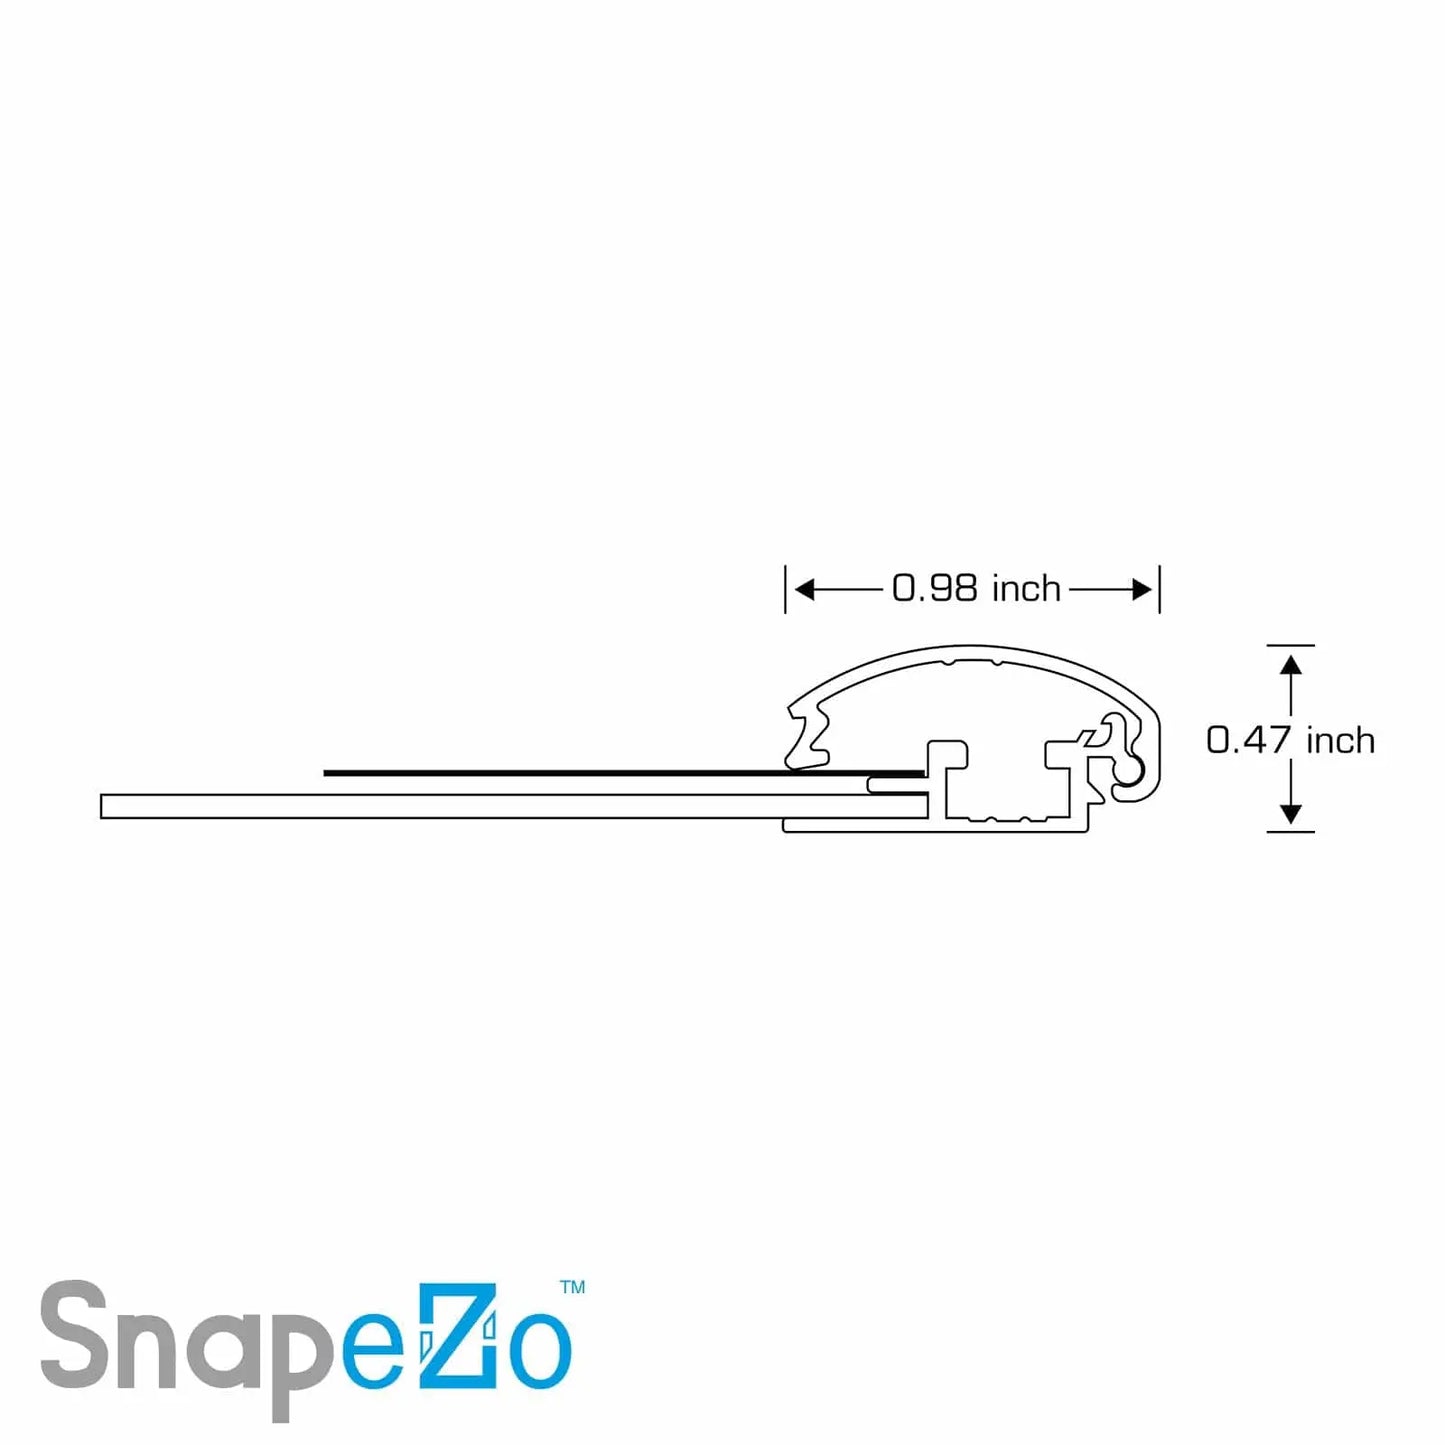 8.5x11 White SnapeZo® Round-Cornered - 1" Profile - Snap Frames Direct